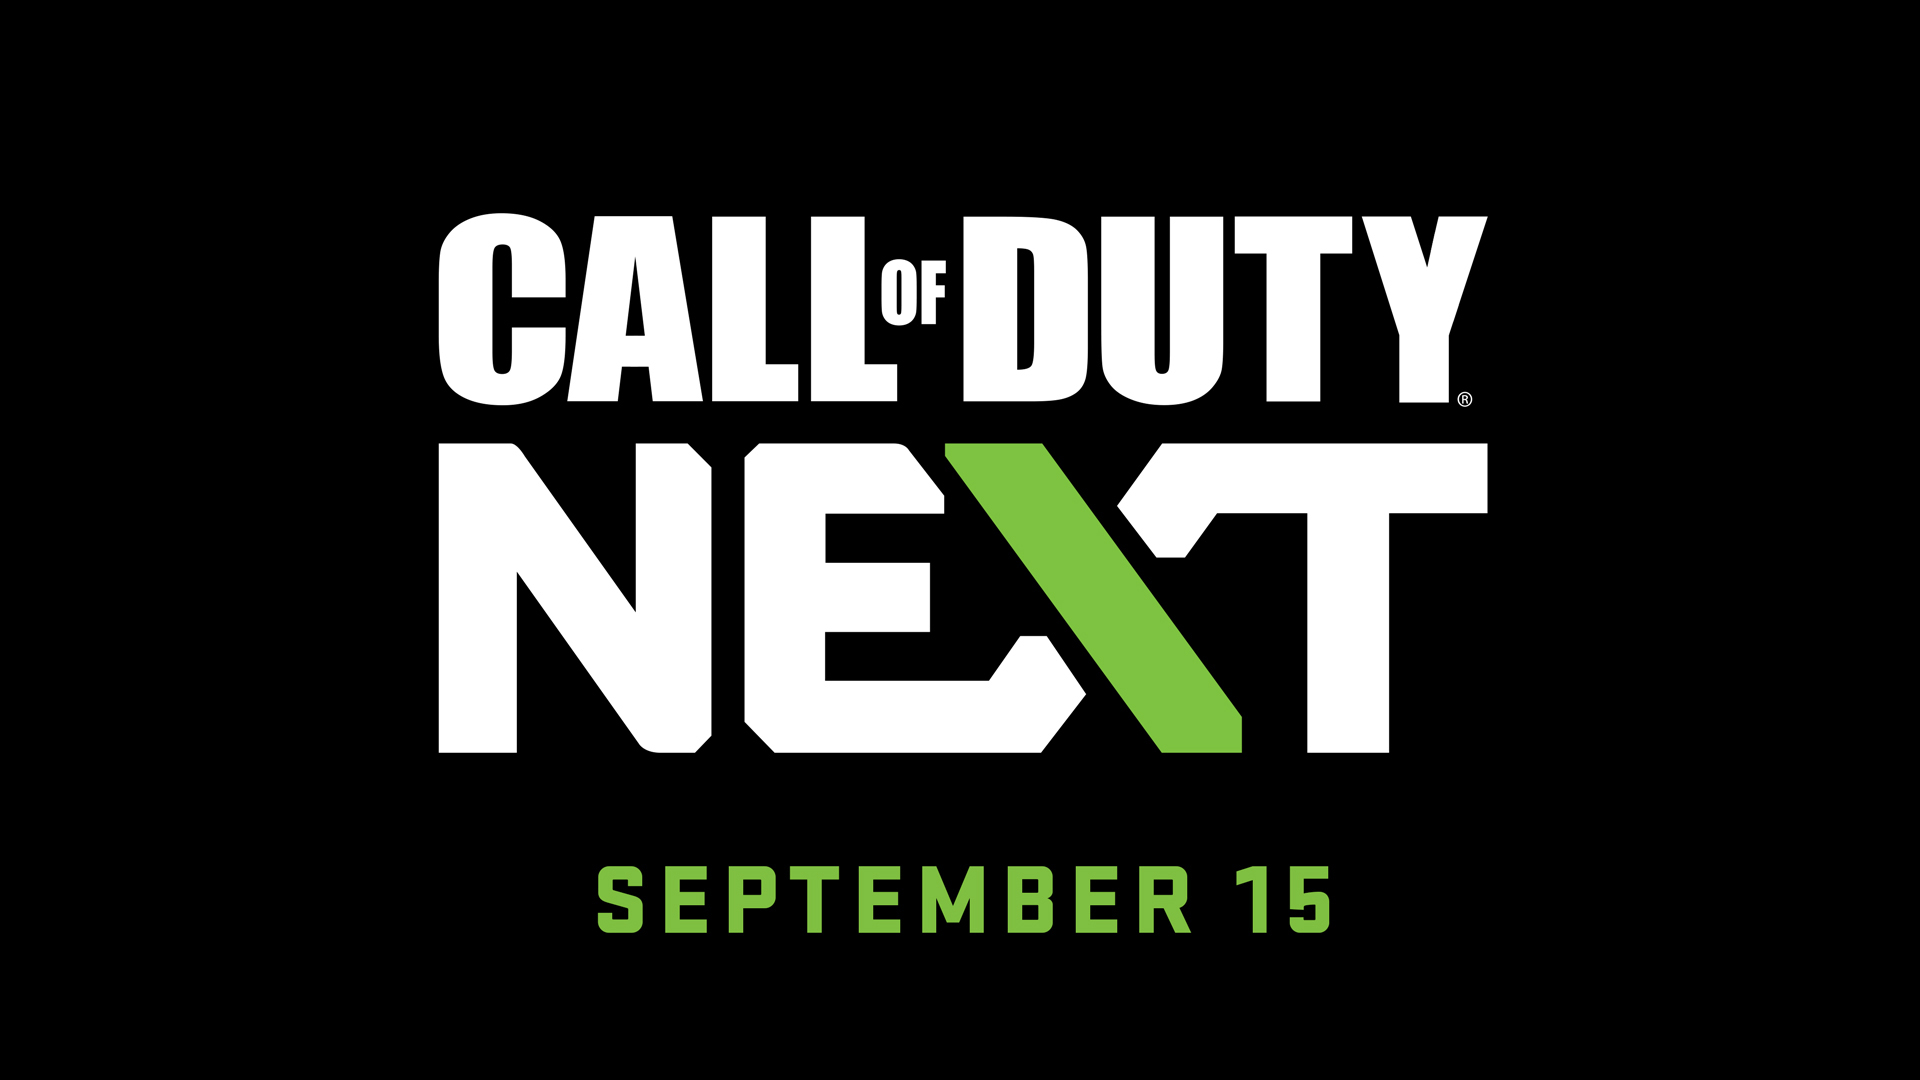 Conheça o Call of Duty Next, evento da Activision focado nas novidades dos próximos títulos